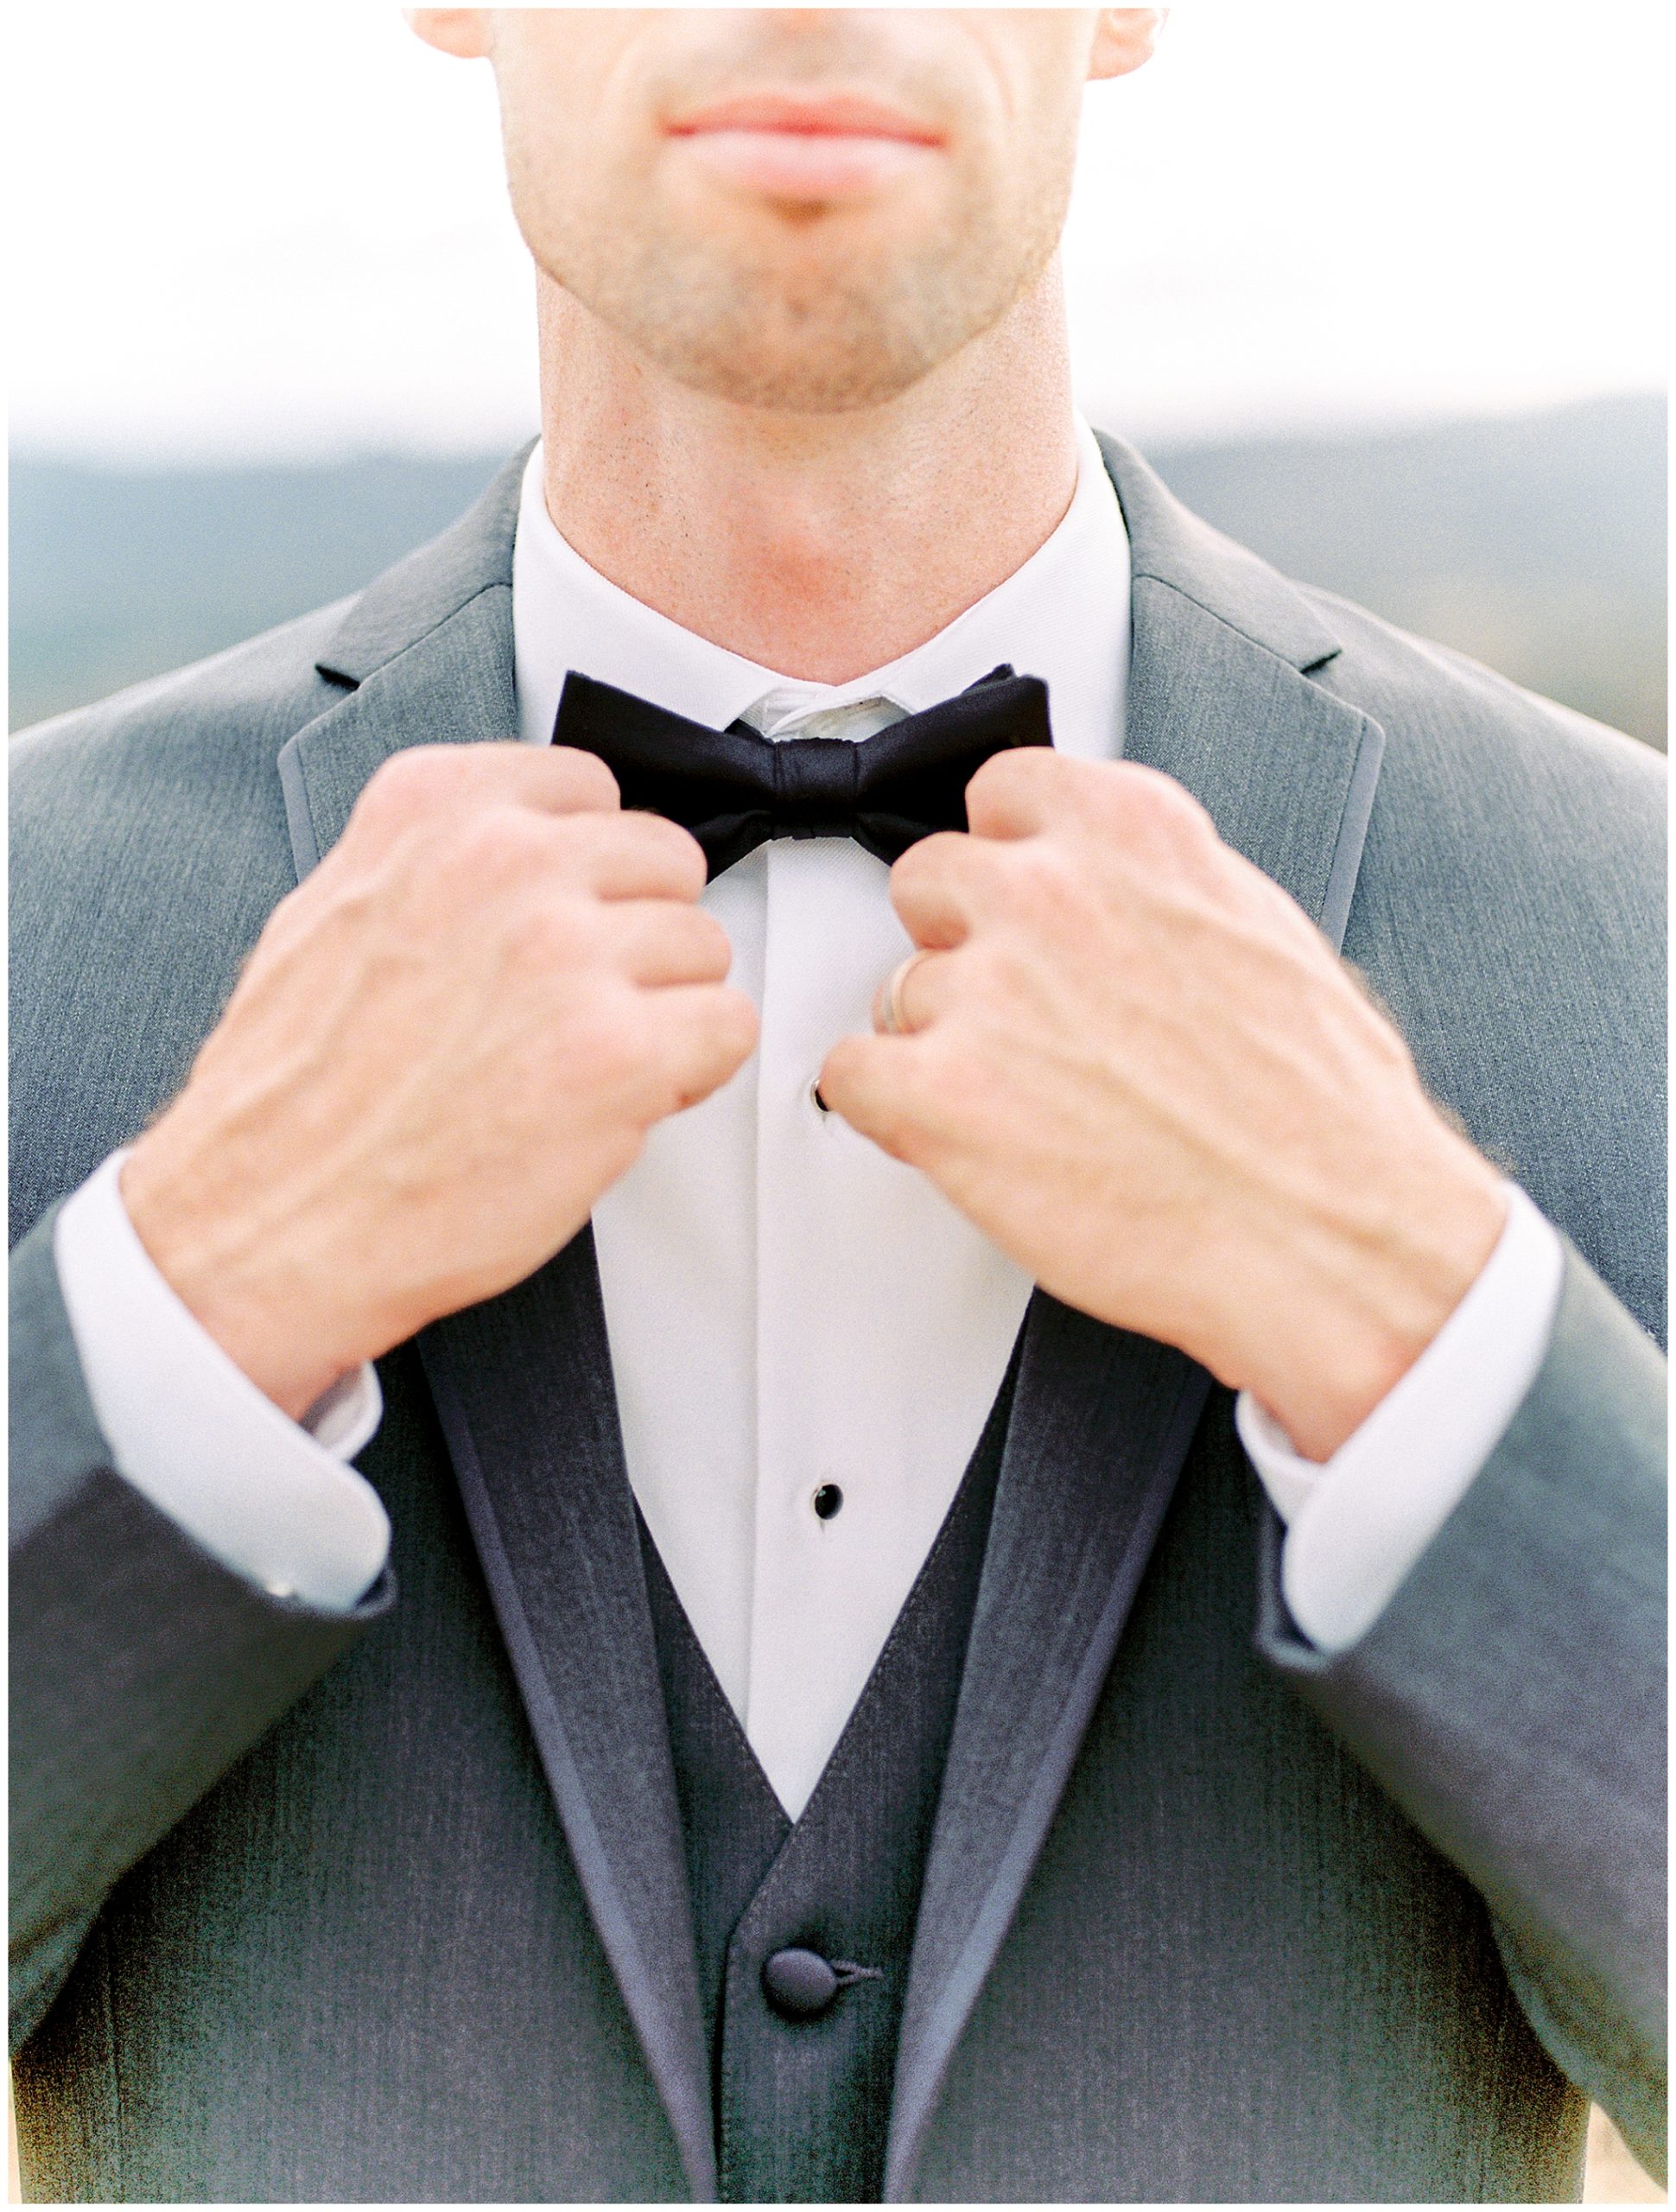 detail shot of the groom's tie